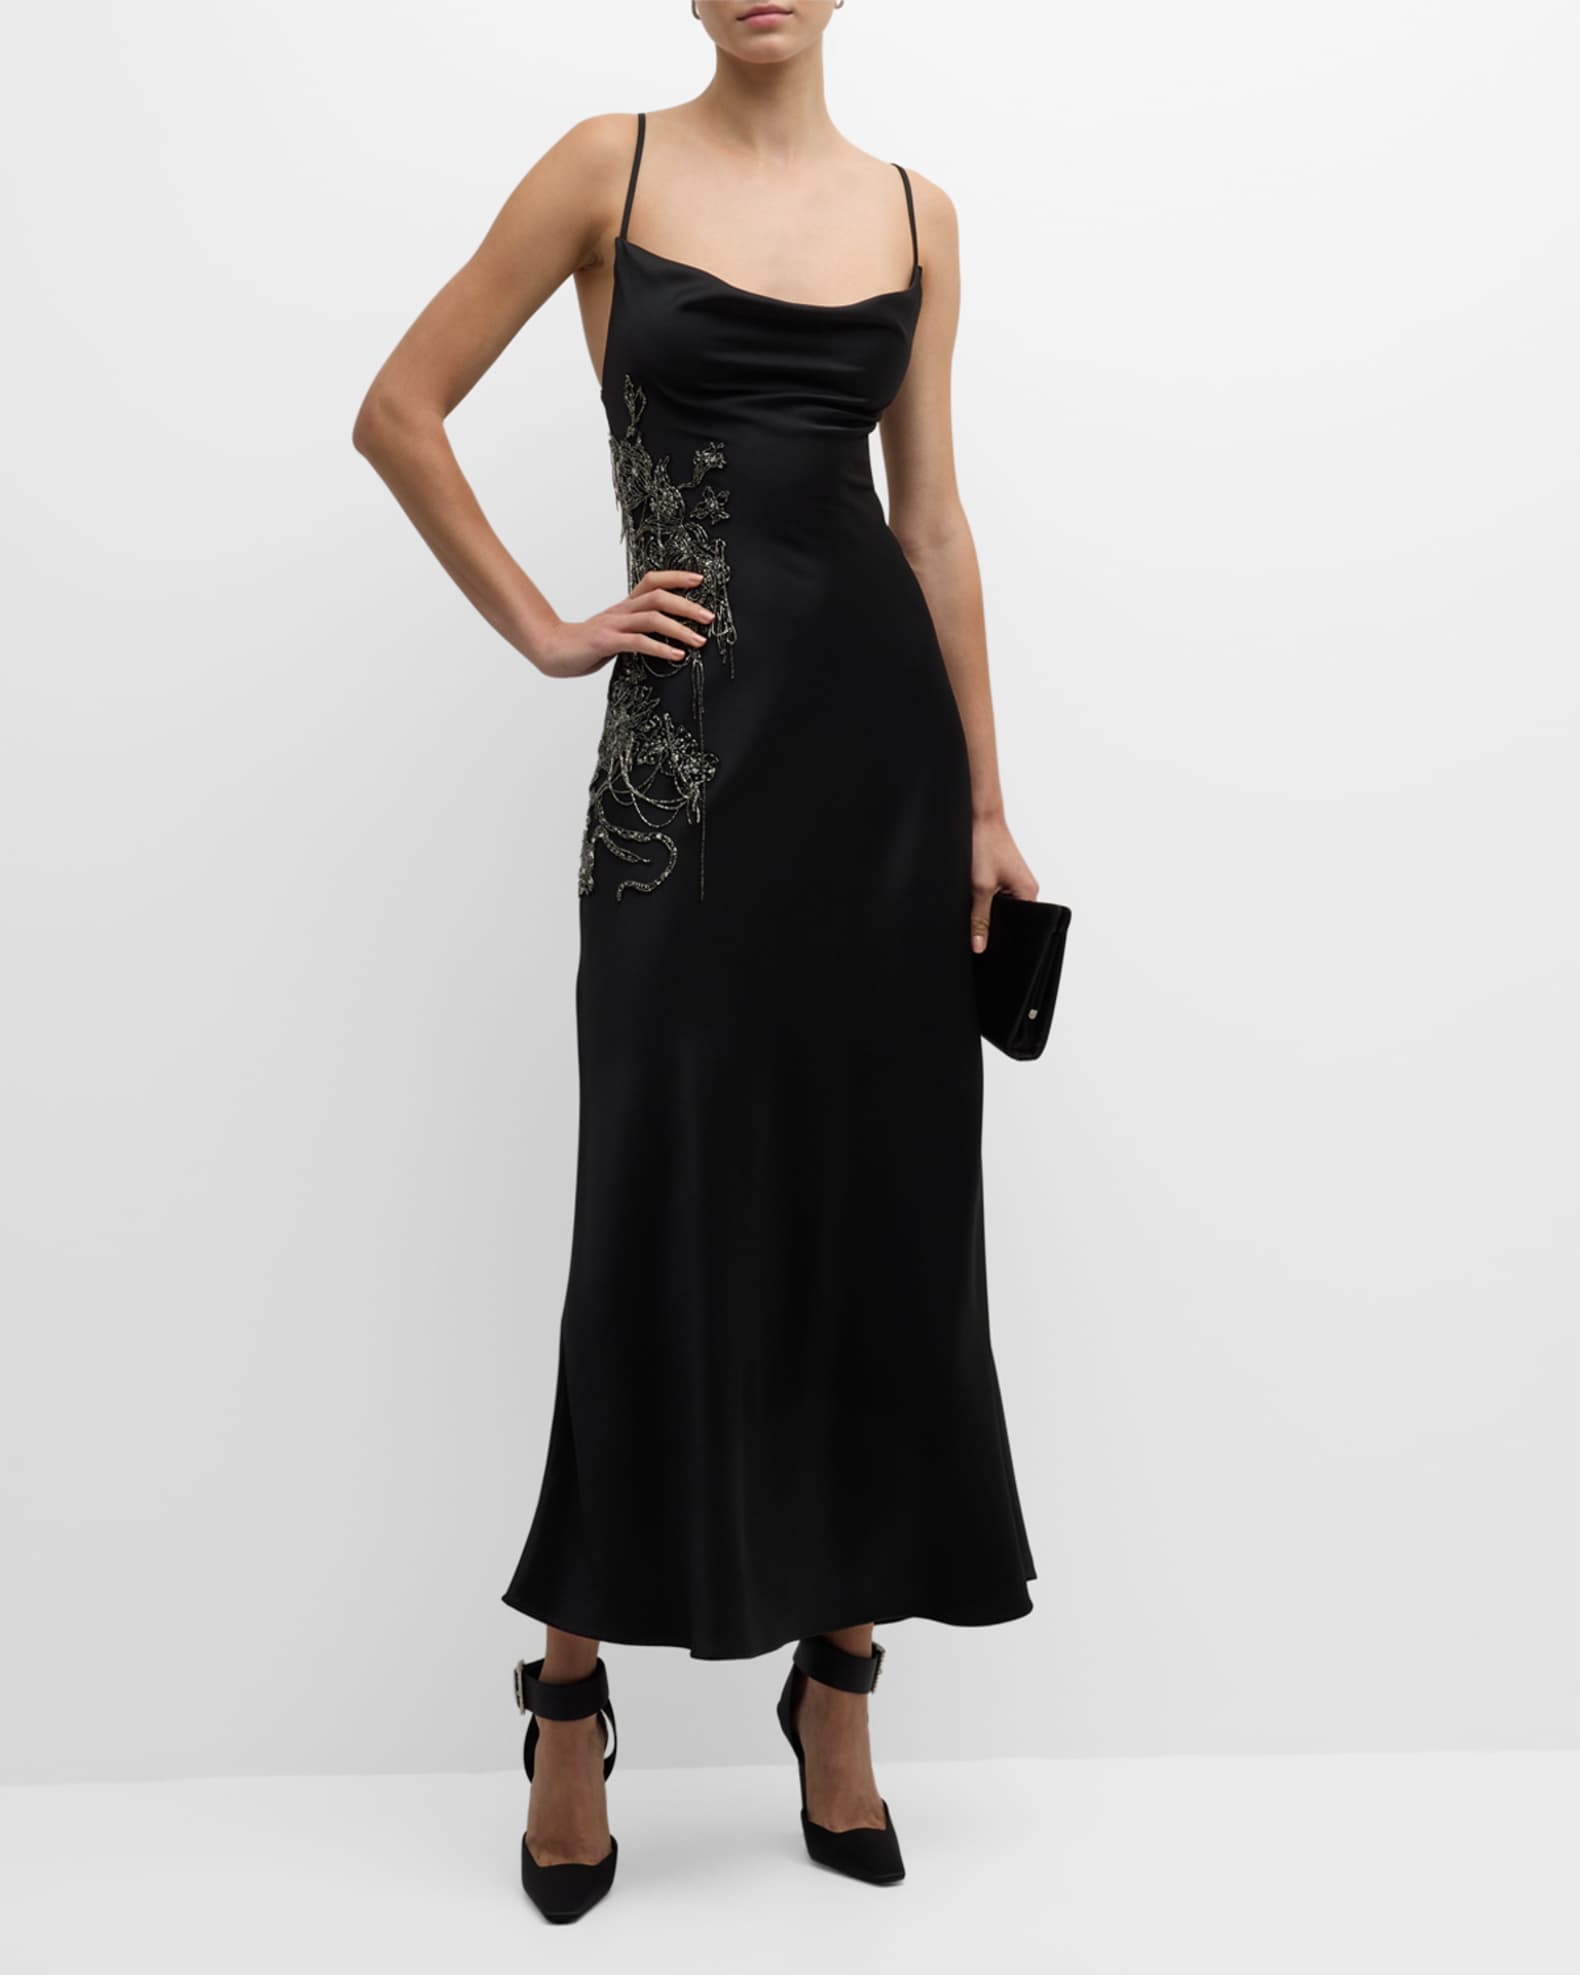 Black Silk Cocktail Dress with Applique